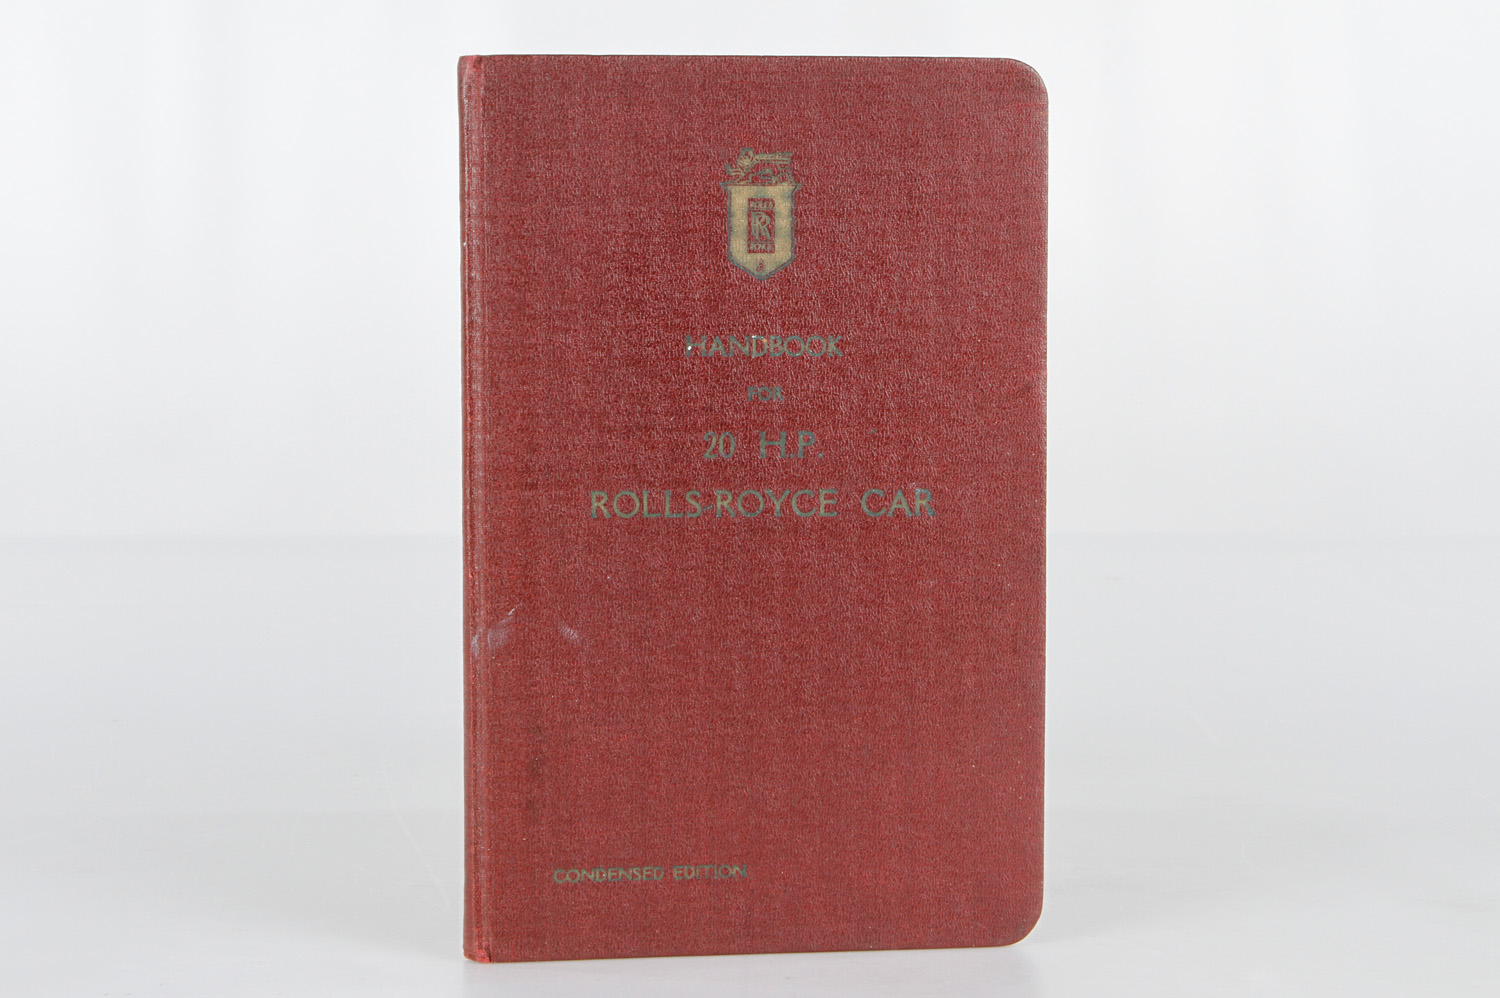 Handbook Condensed Edition Rolls-Royce 20 H.P. @ englisch, s/w bebildert